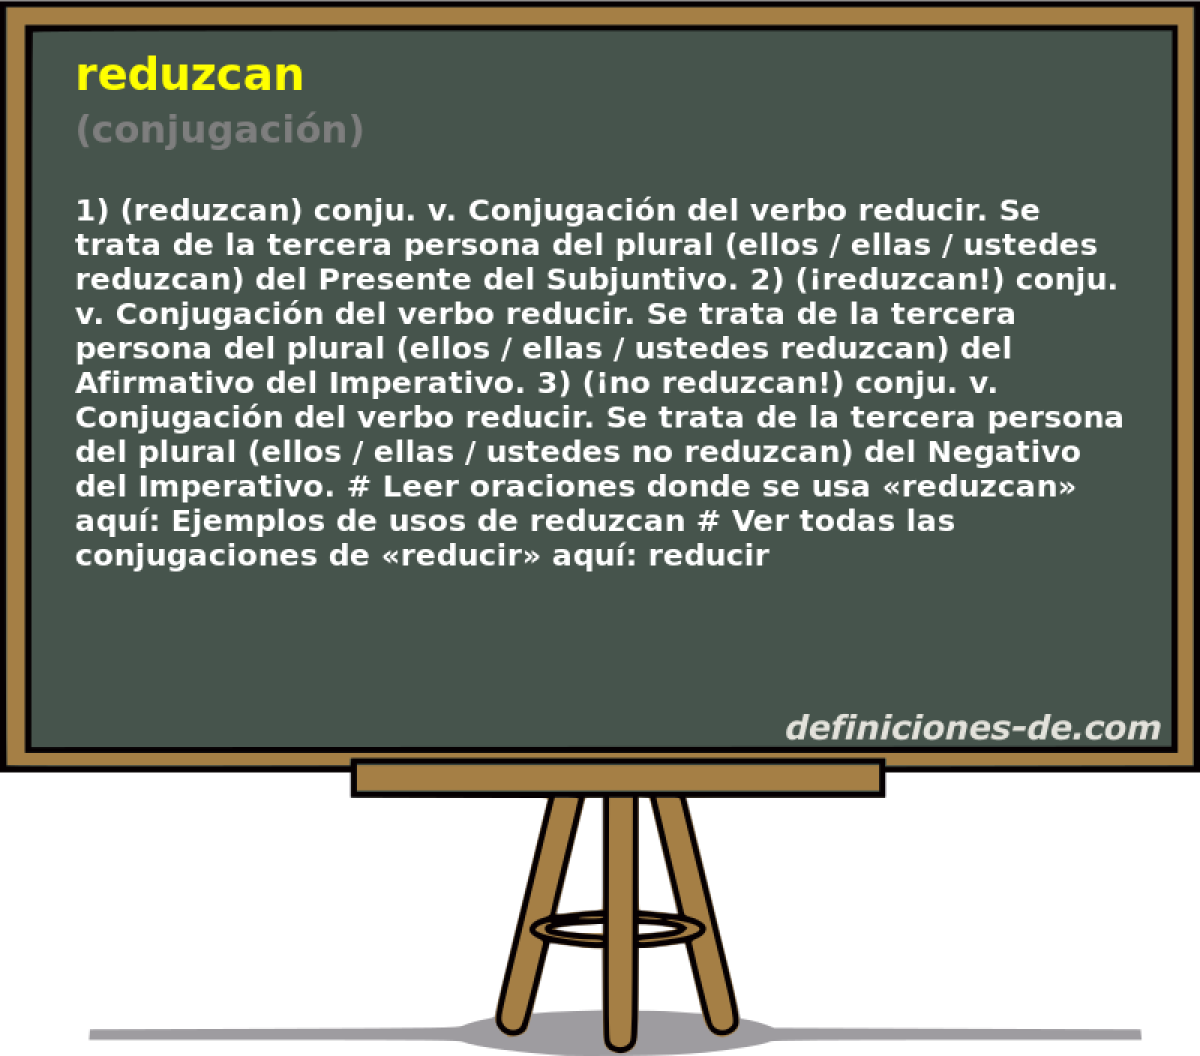 reduzcan (conjugacin)